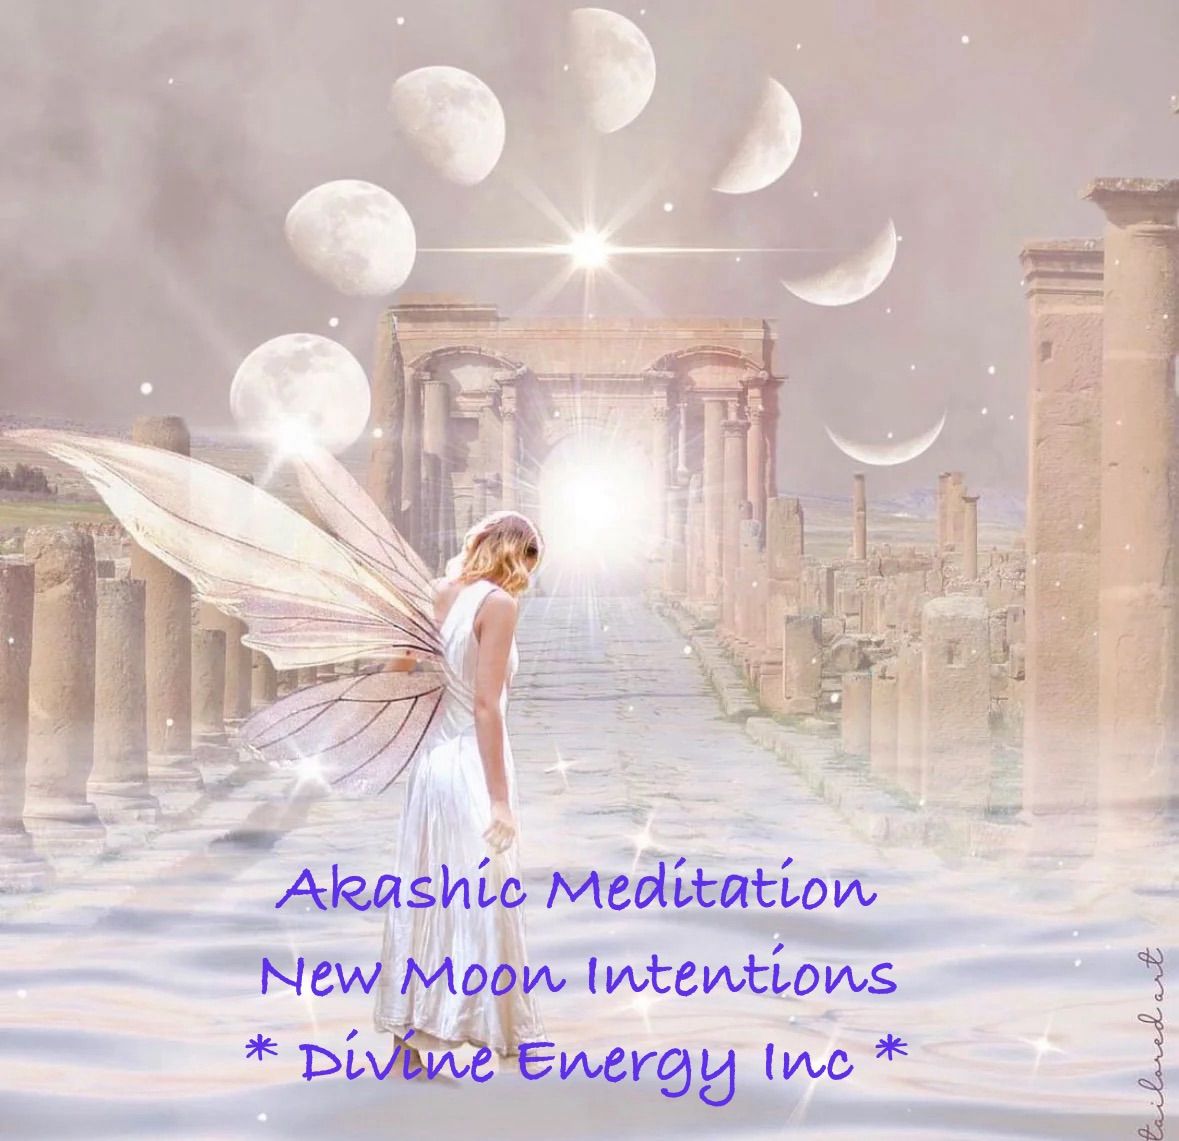 Akashic Meditation - New Moon Intentions